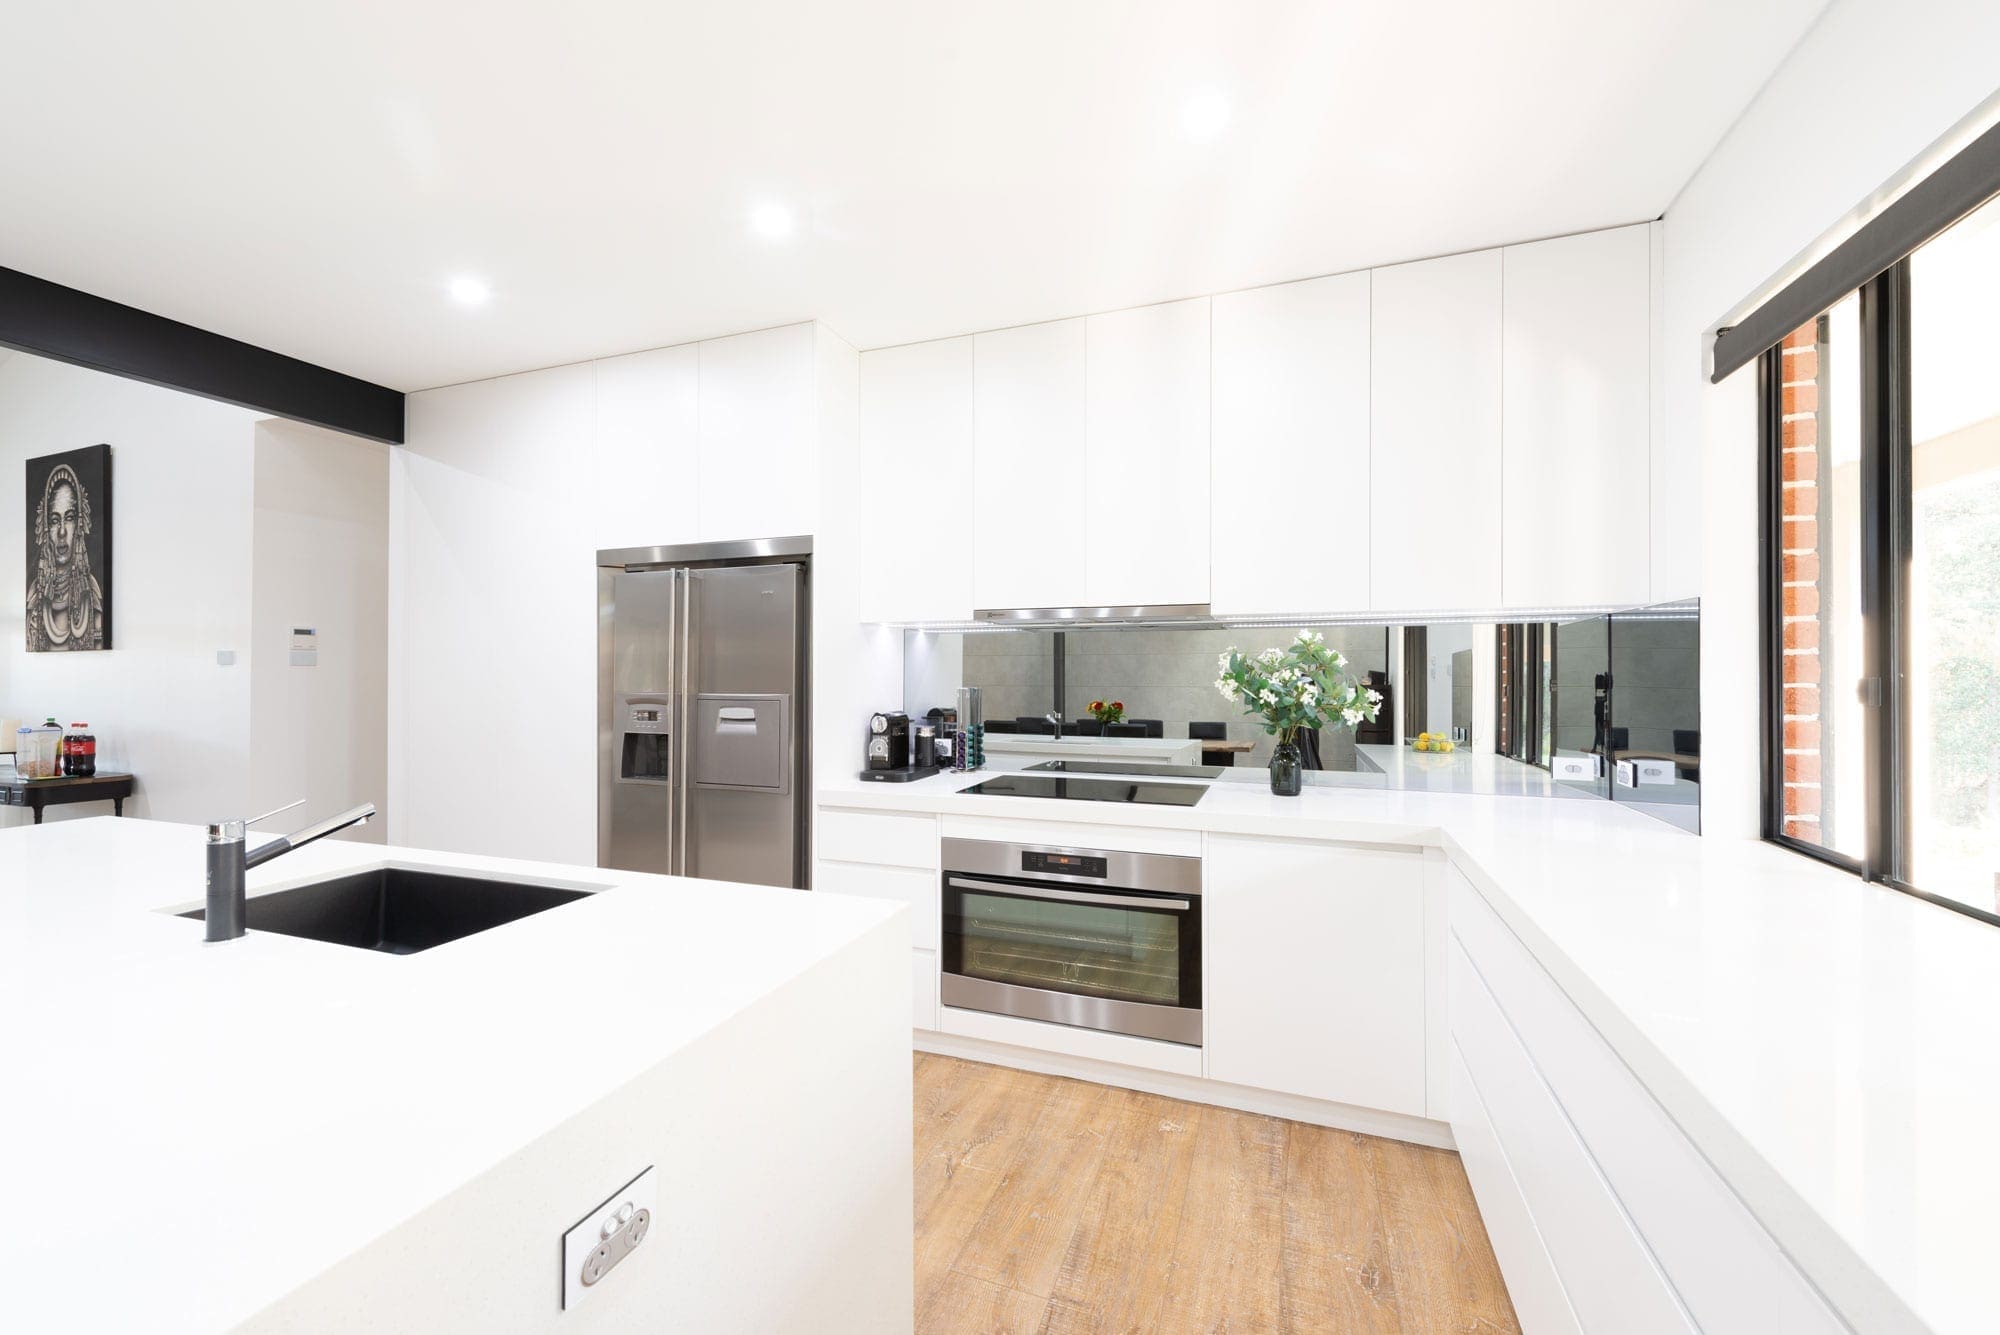 Modern white polyurethane kitchen Oakdale mirrored splashback oven cooktop